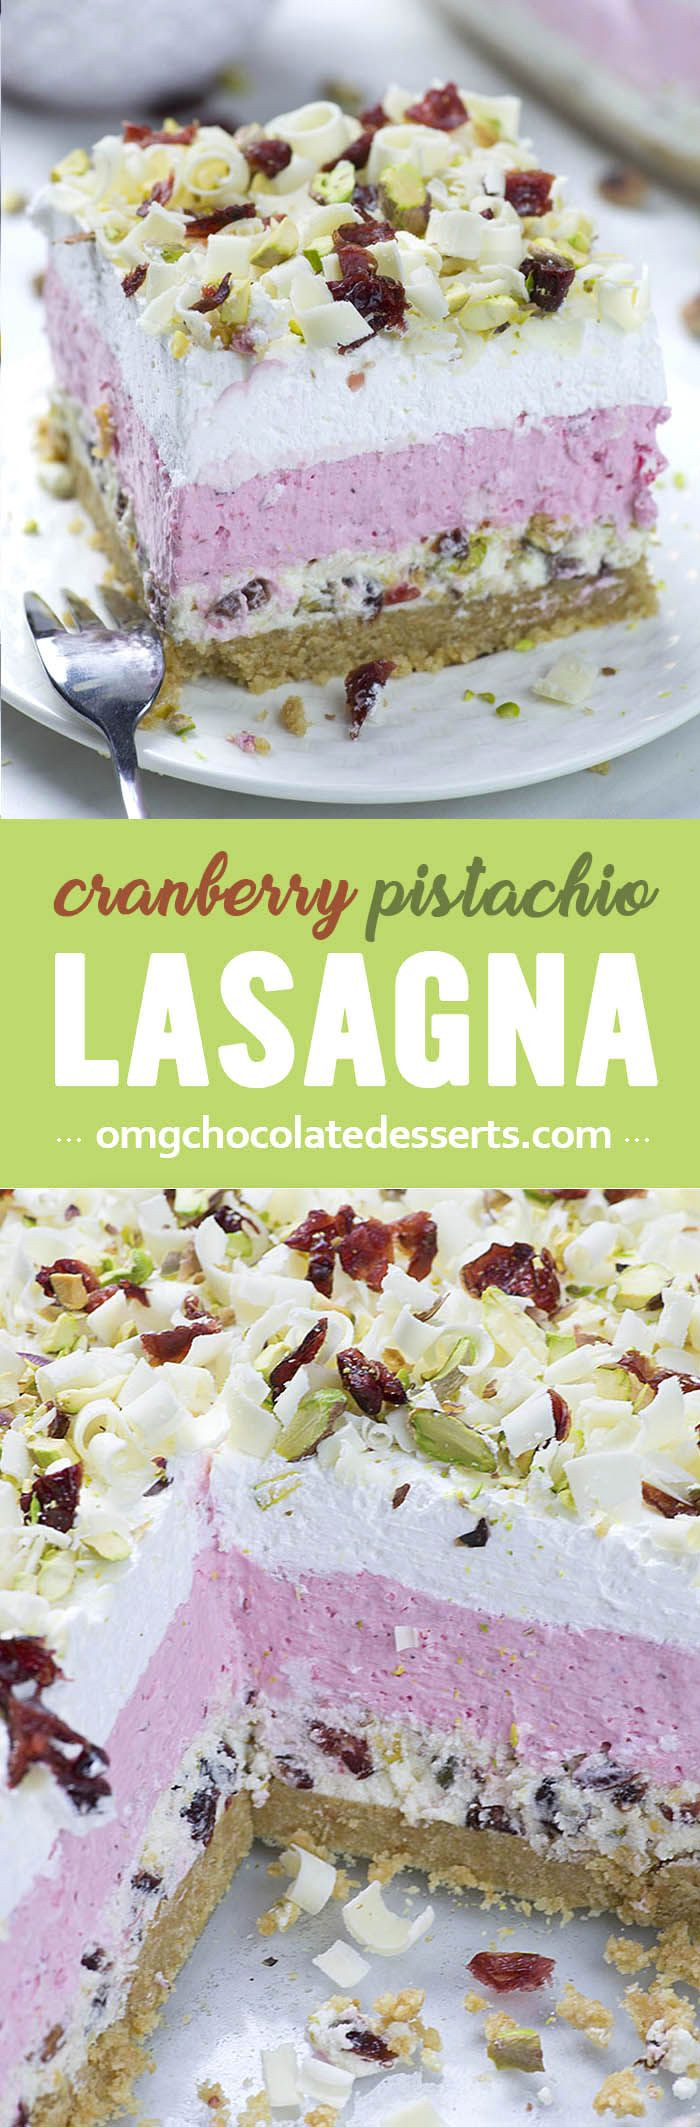 Easy Christmas Desserts Pinterest
 Cranberry Pistachio Lasagna is easy NO BAKE dessert for